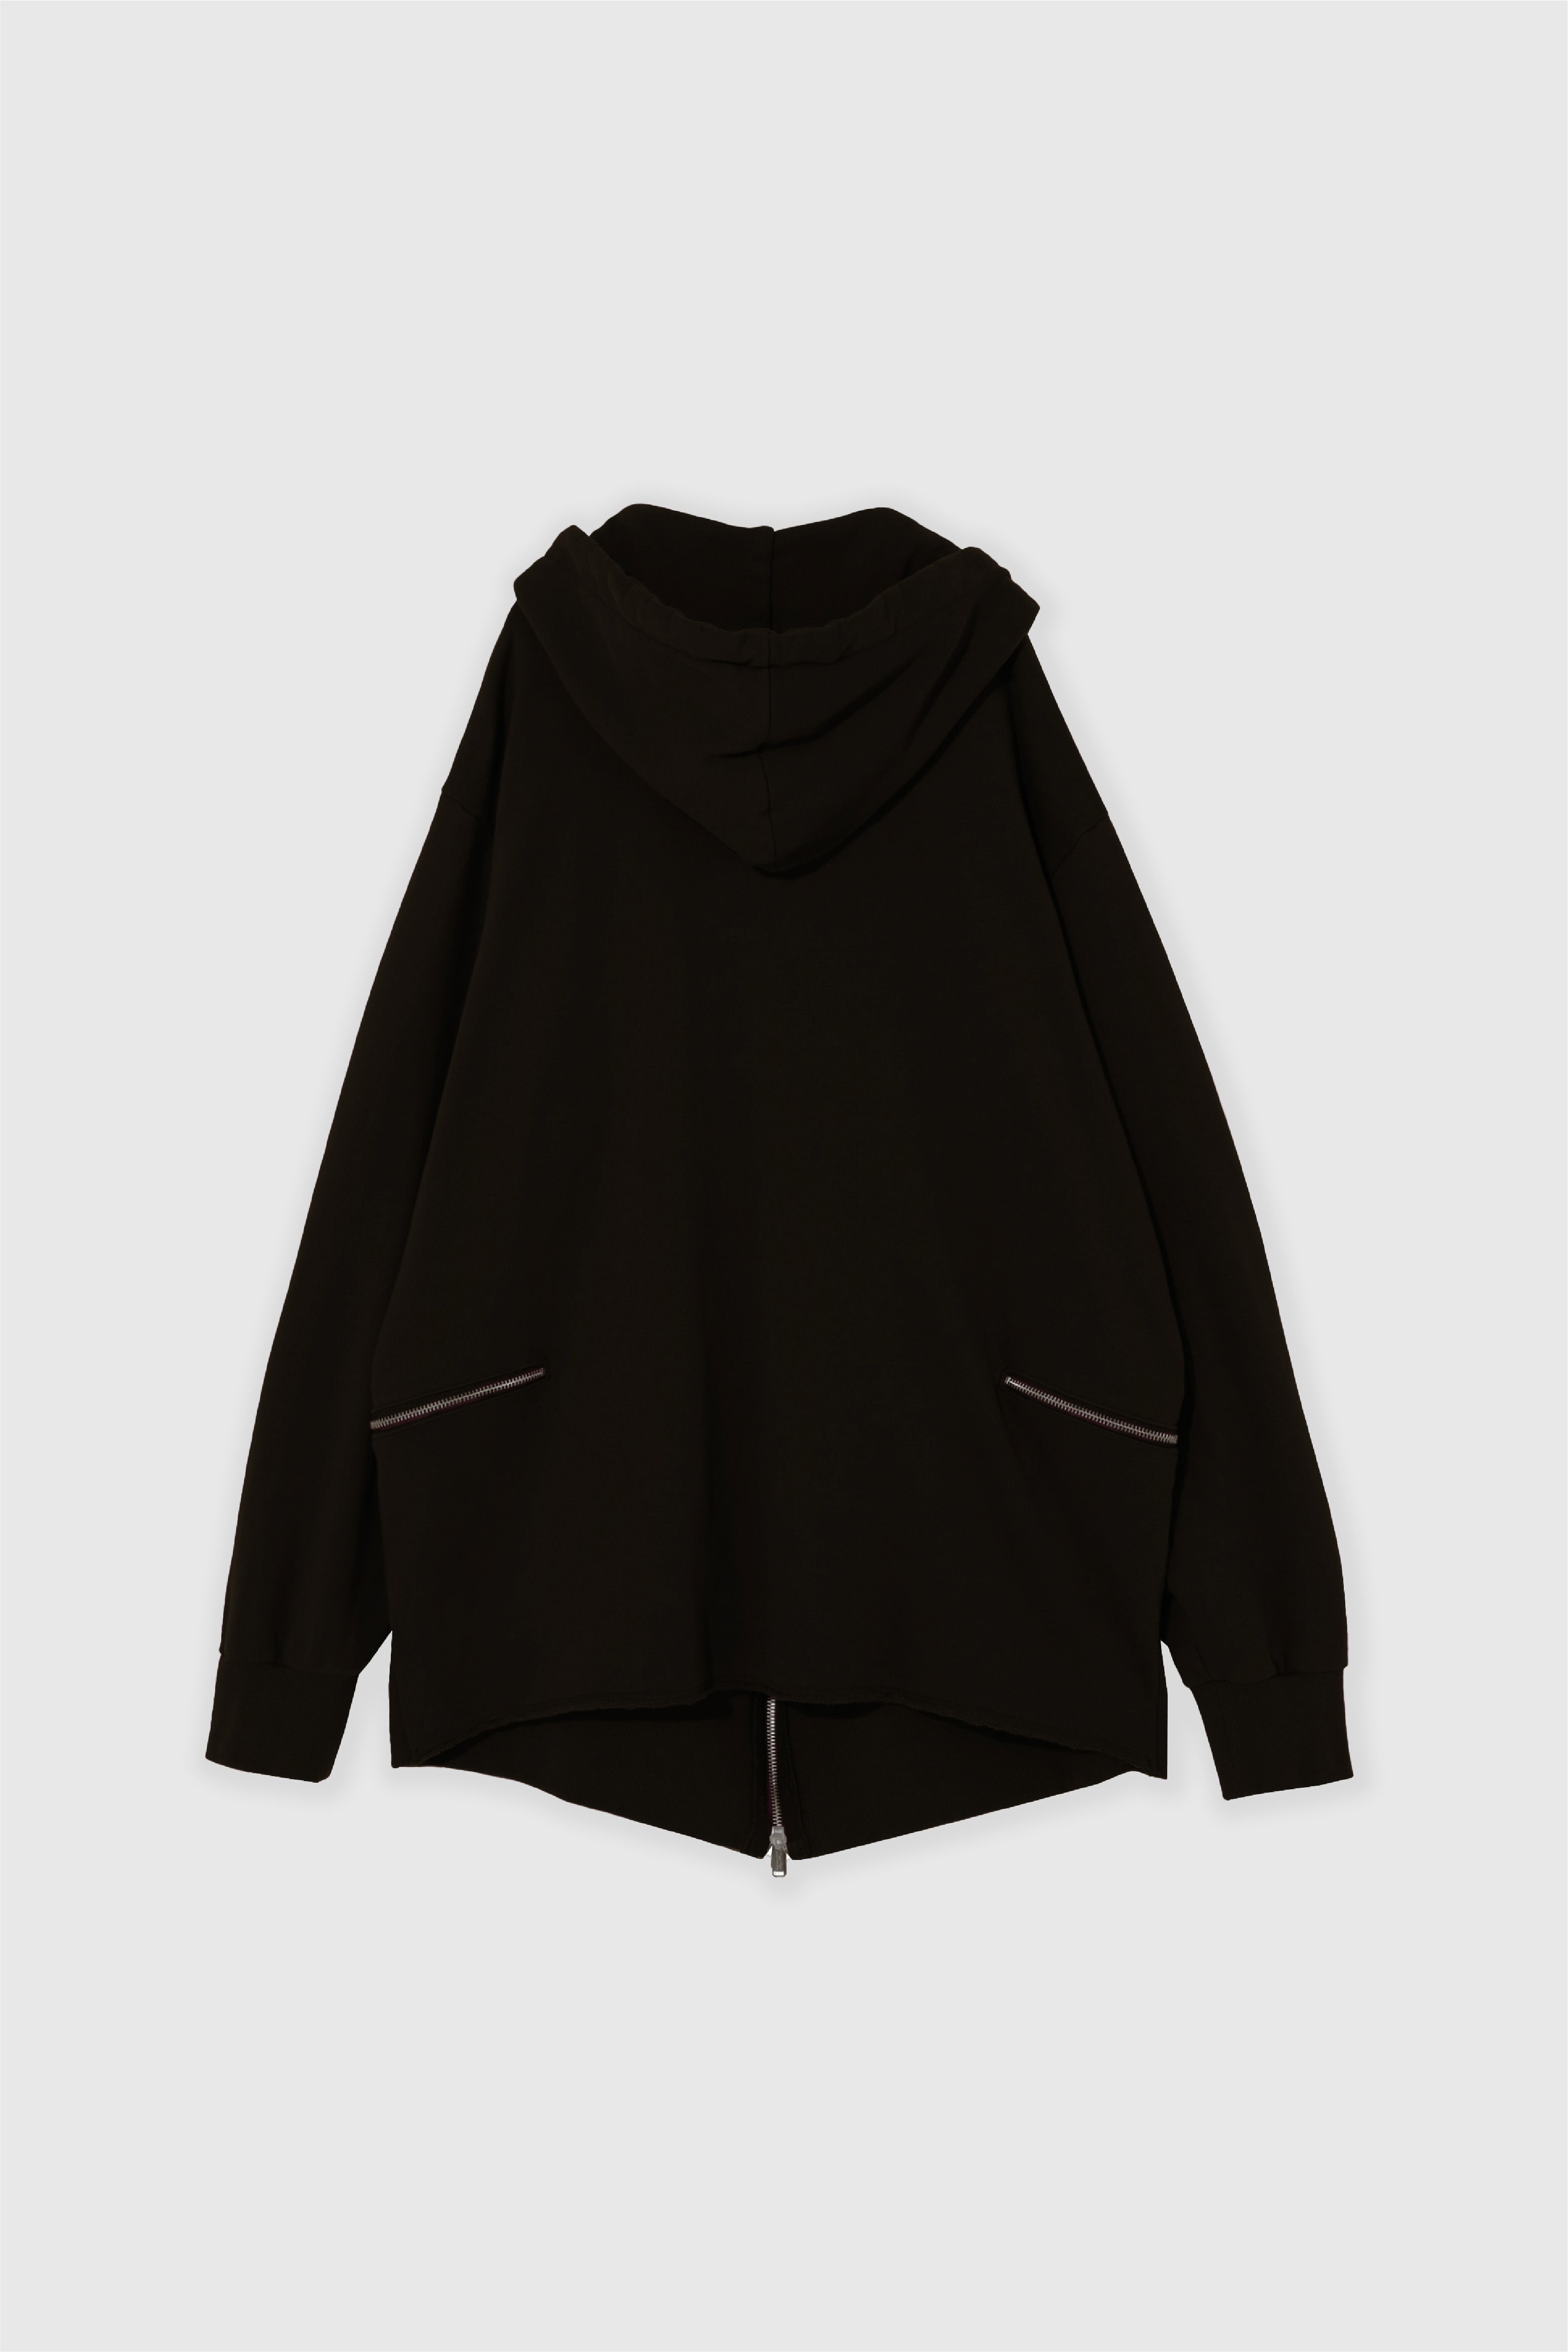 Selectshop FRAME - UNDERCOVERISM Hoodie Sweats-knits Concept Store Dubai